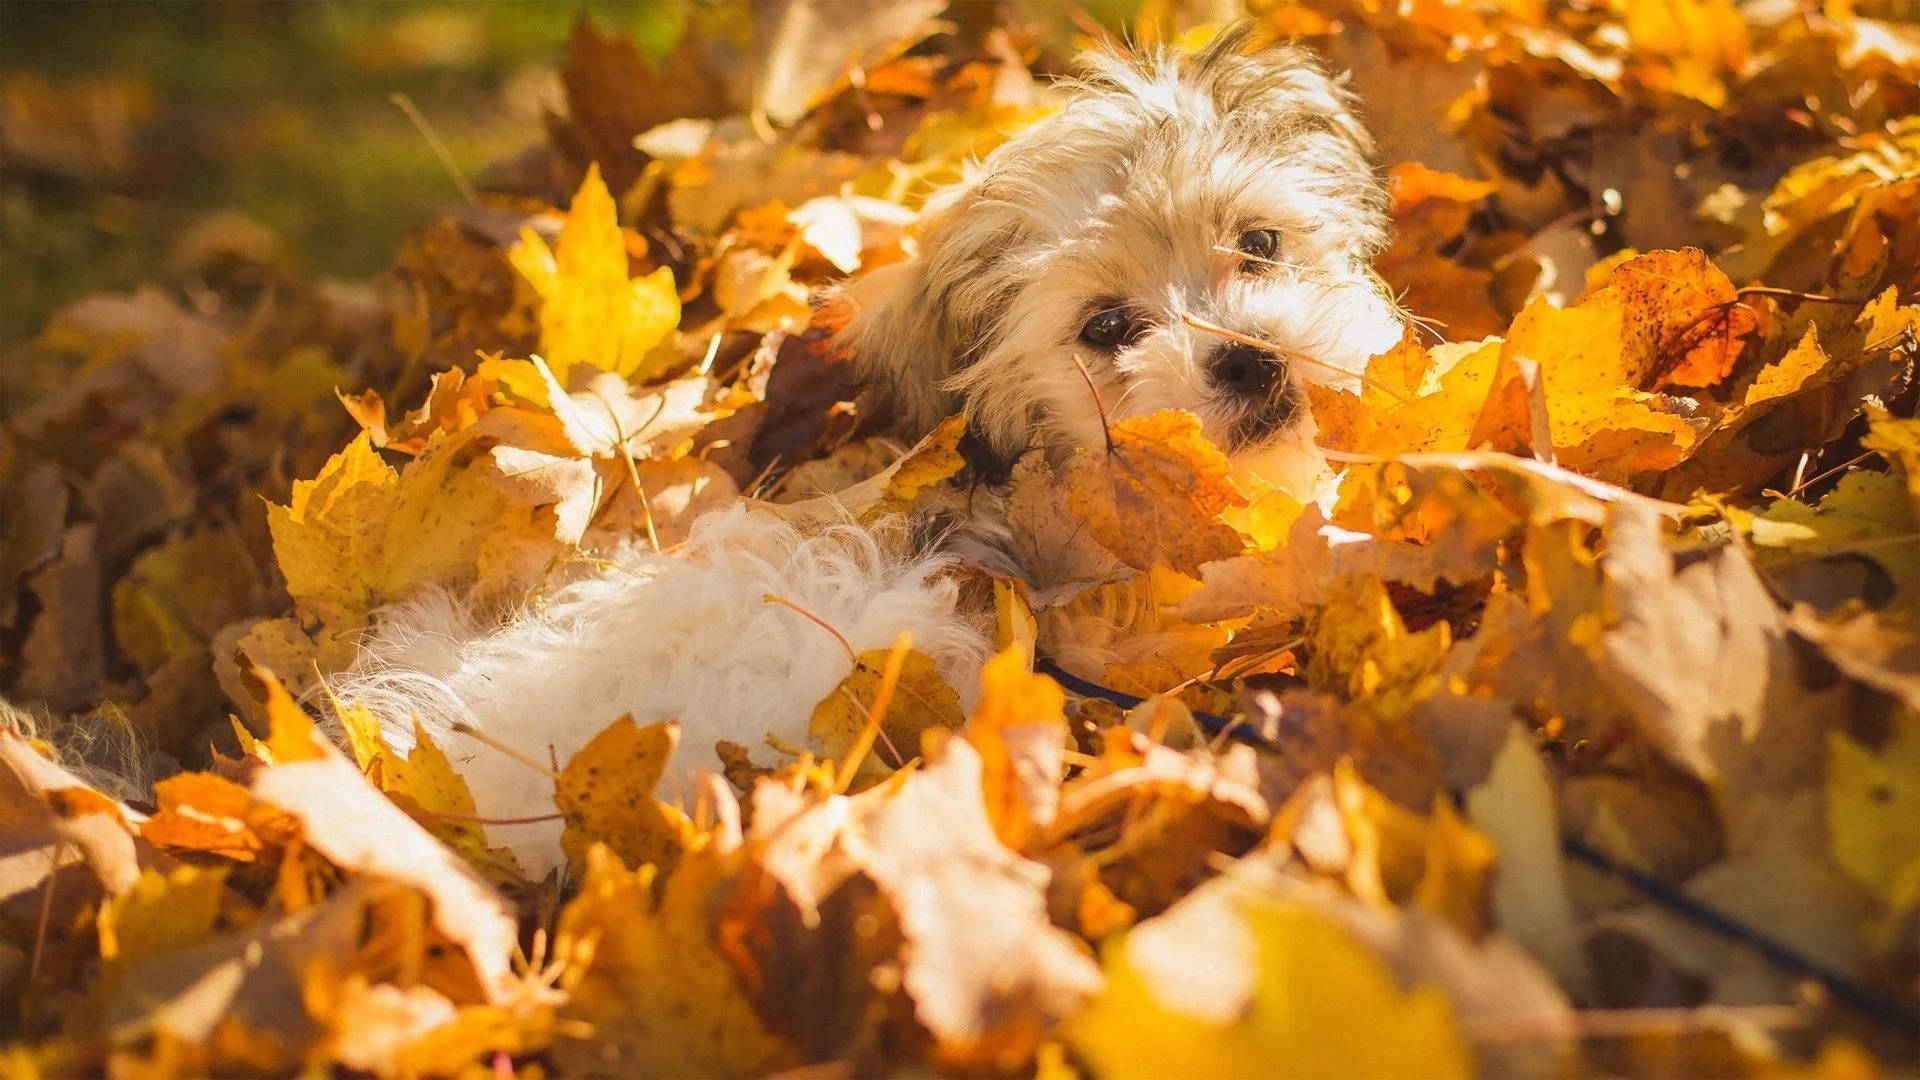 Morkie Dog On Fall Season Leaves Wallpaper